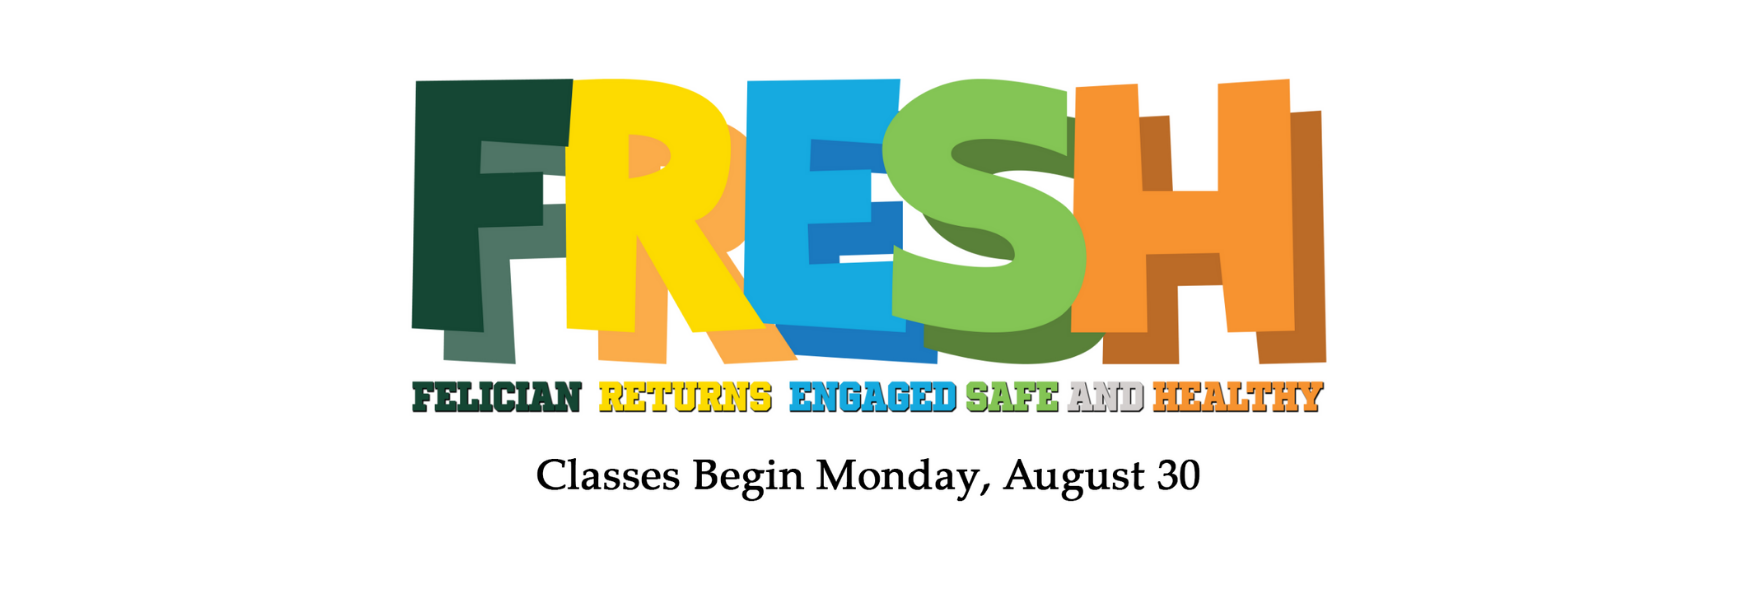 Classes Begin Monday, August 30 Felician University of New Jersey